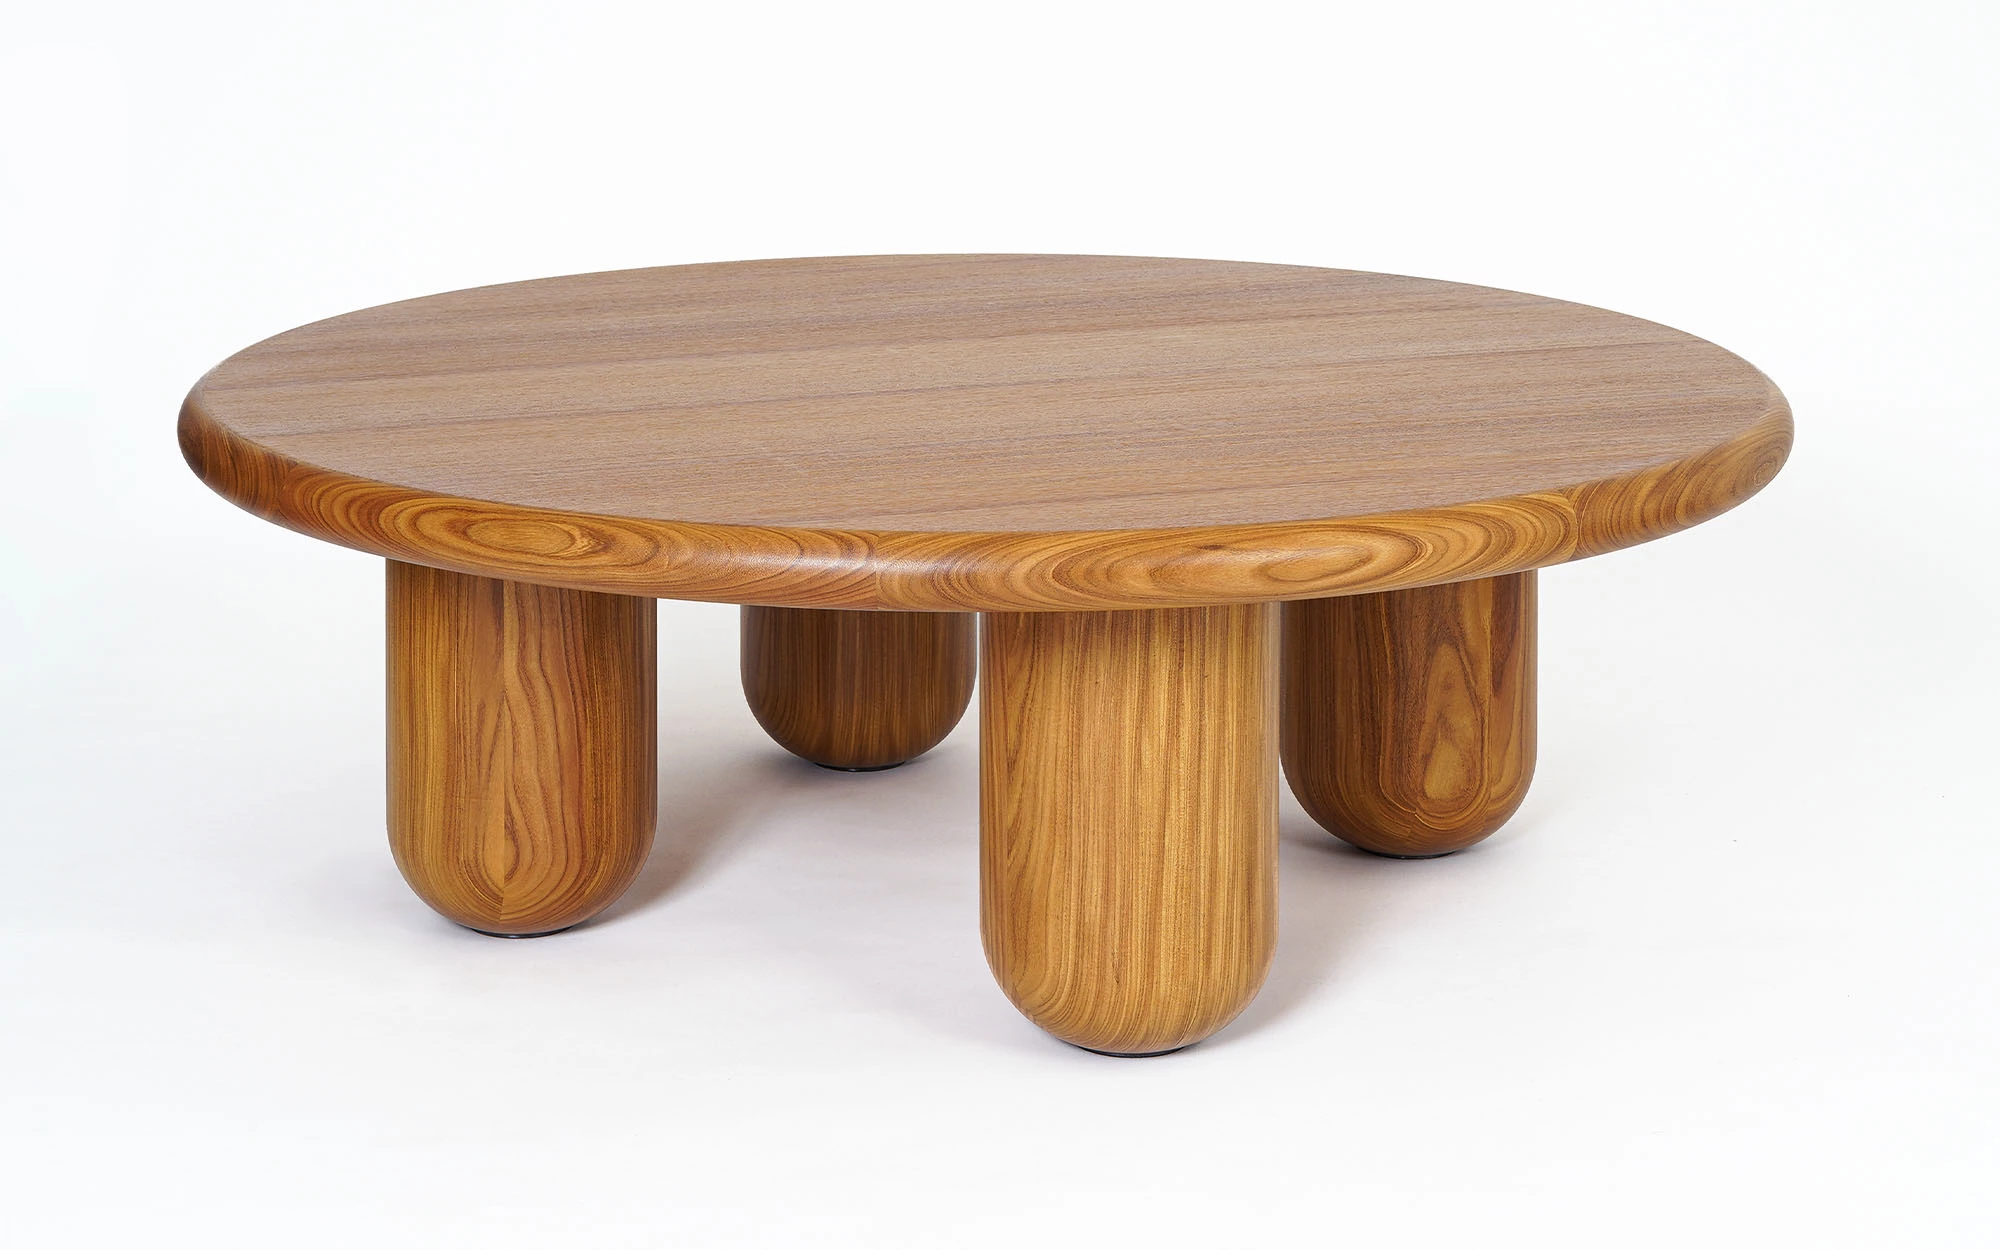 Organism coffee table - Jaime Hayon - Table light - Galerie kreo